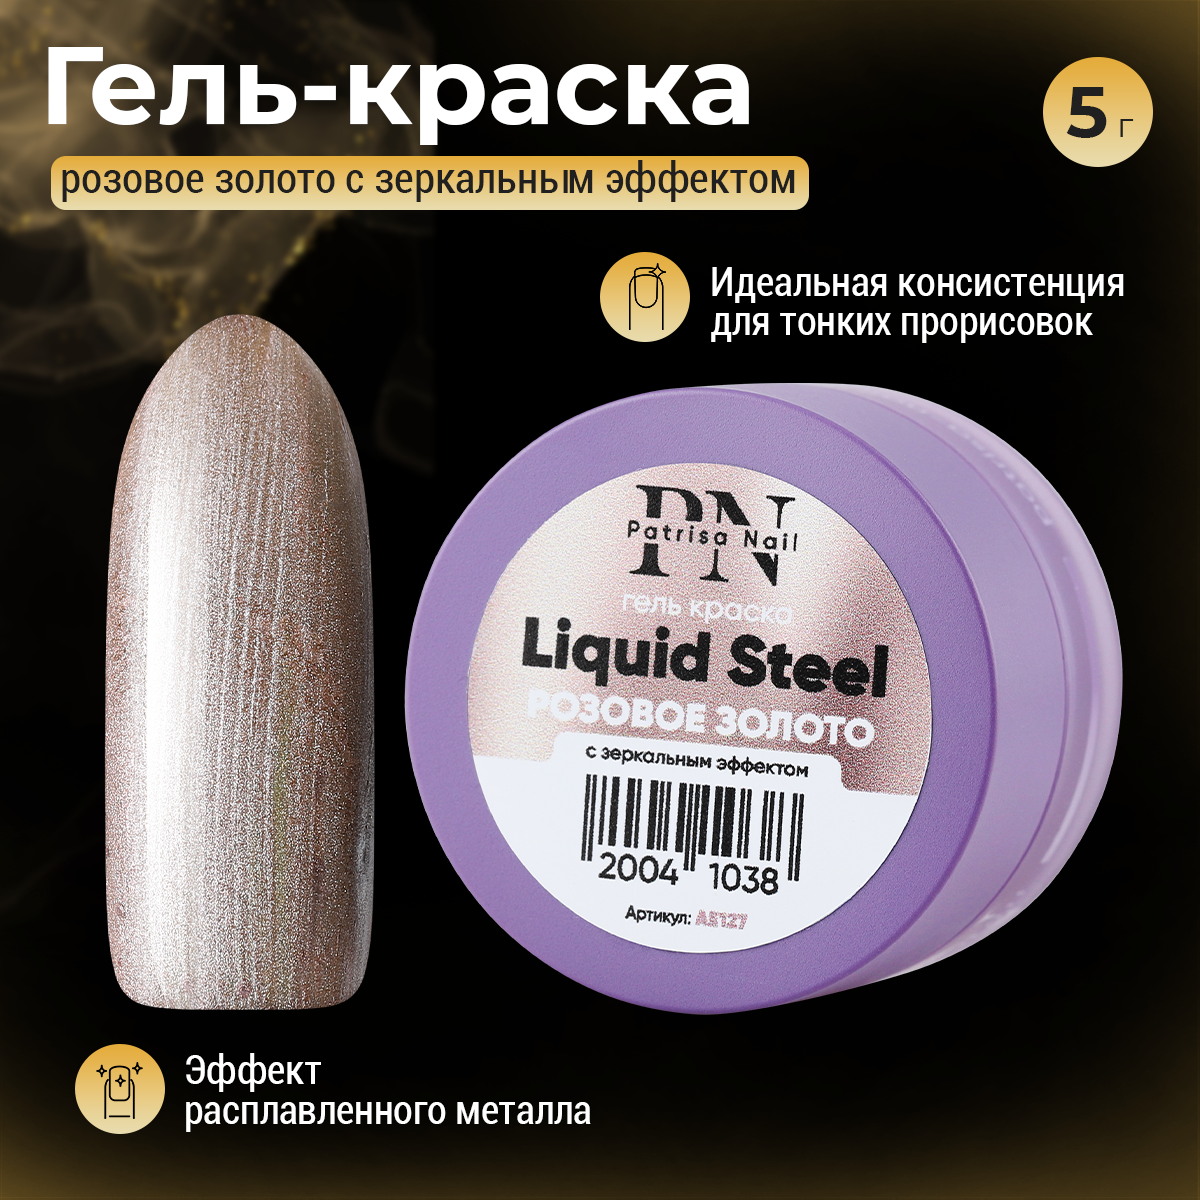 Гель-краска Patrisa nail, Liquid Steel, Розовое золото, 5 г краска гуашевая золото светлое 22мл банка olki